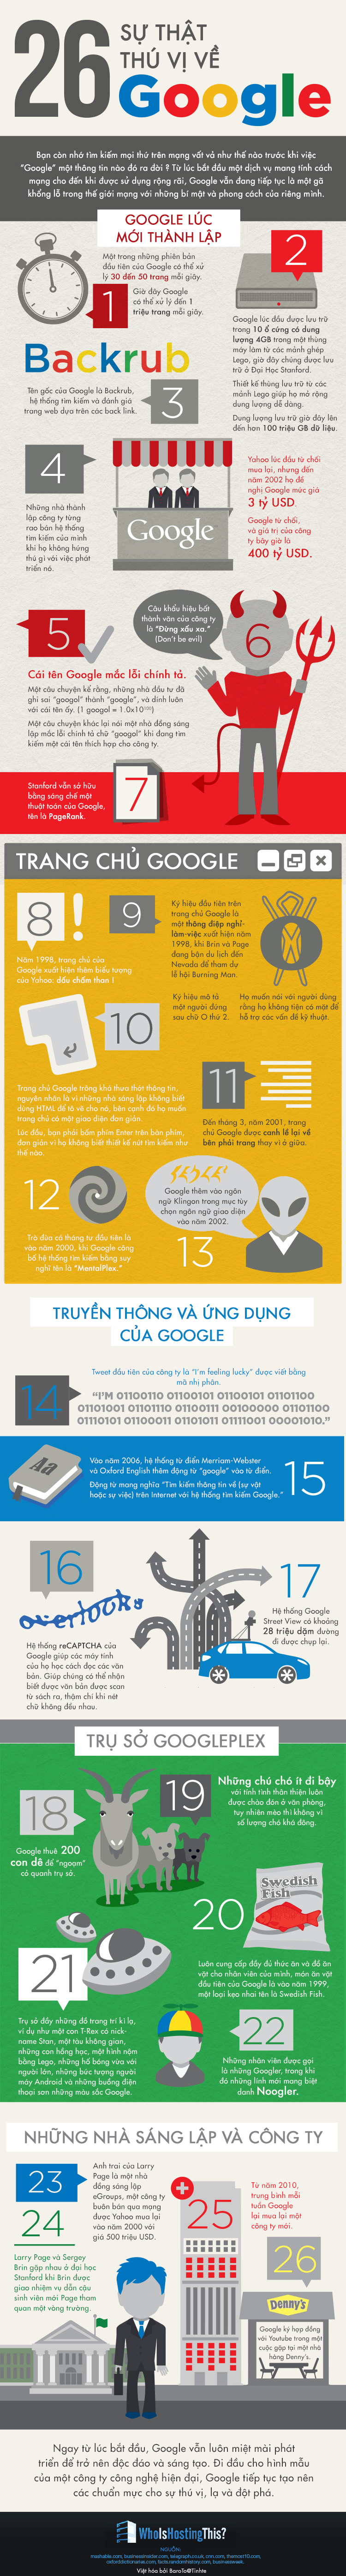 [Infographic] 26 su that thu vi ve google.jpg